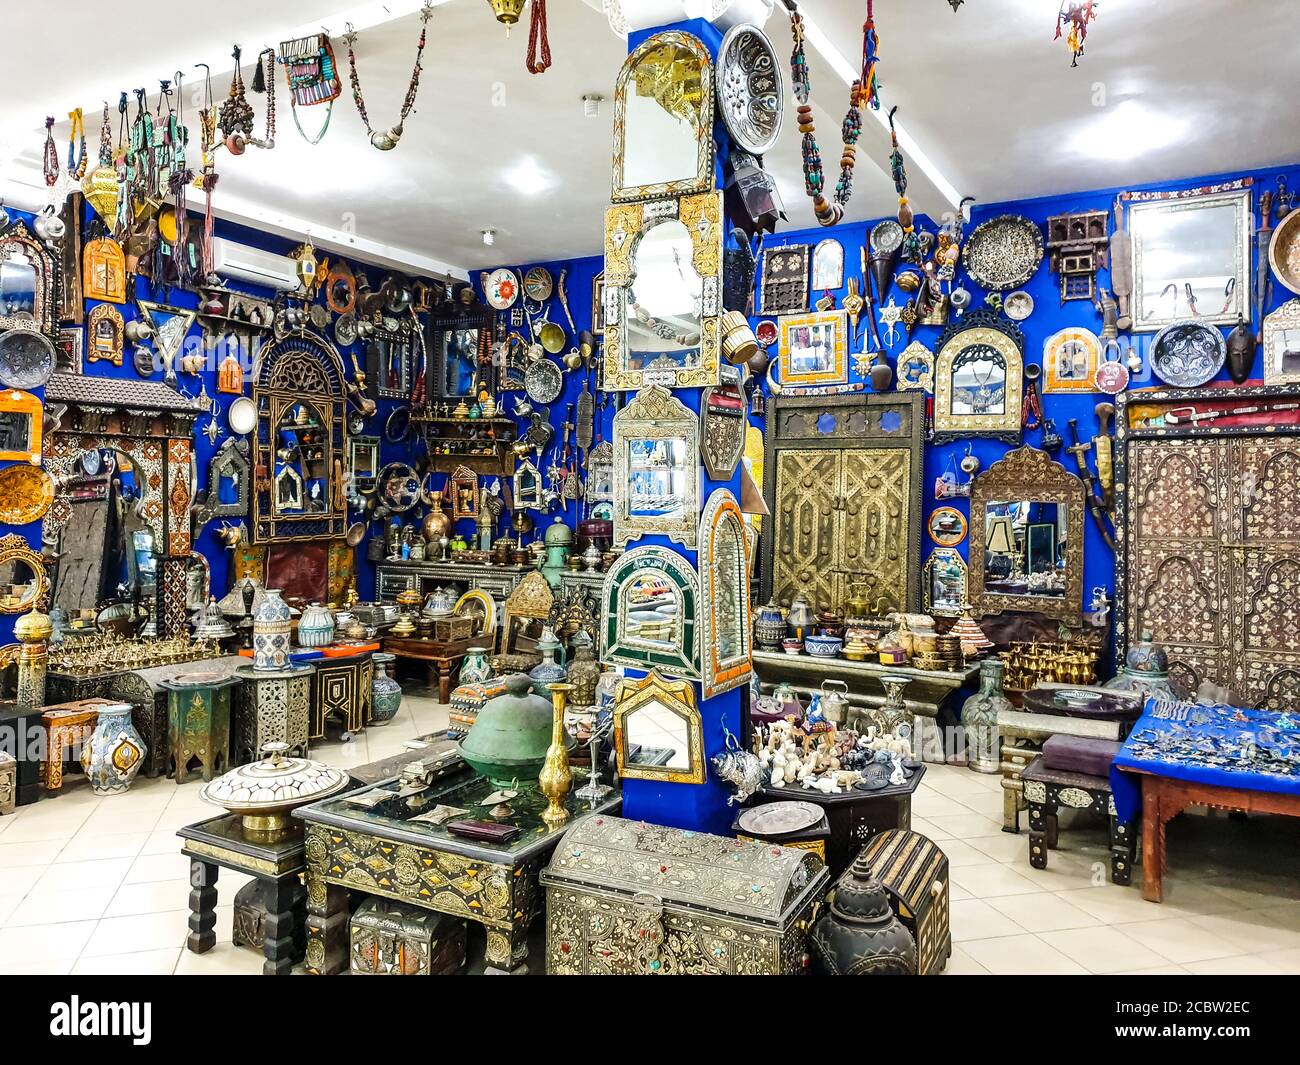 Inside a shop in Ouarzazate Stock Photo